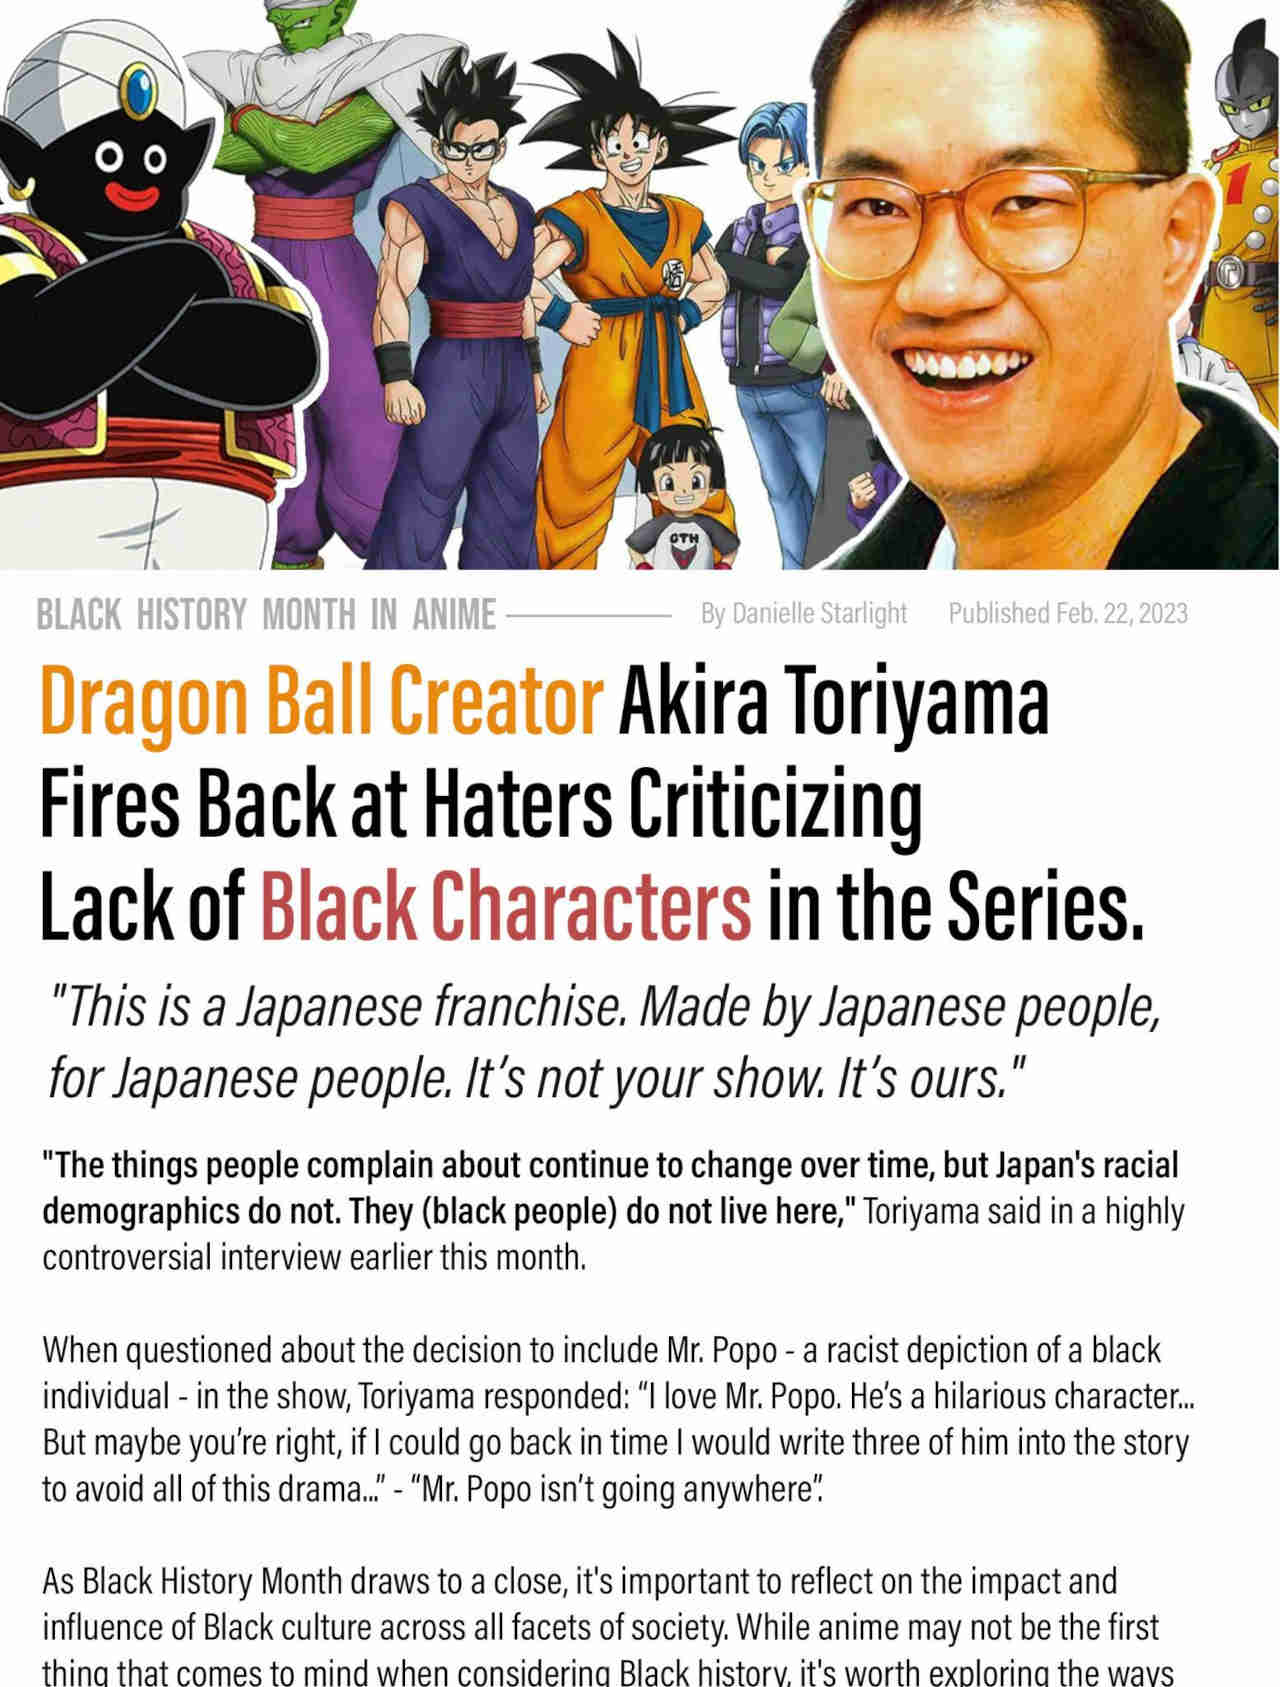 Vuelve el bait que llama a Akira Toriyama racista